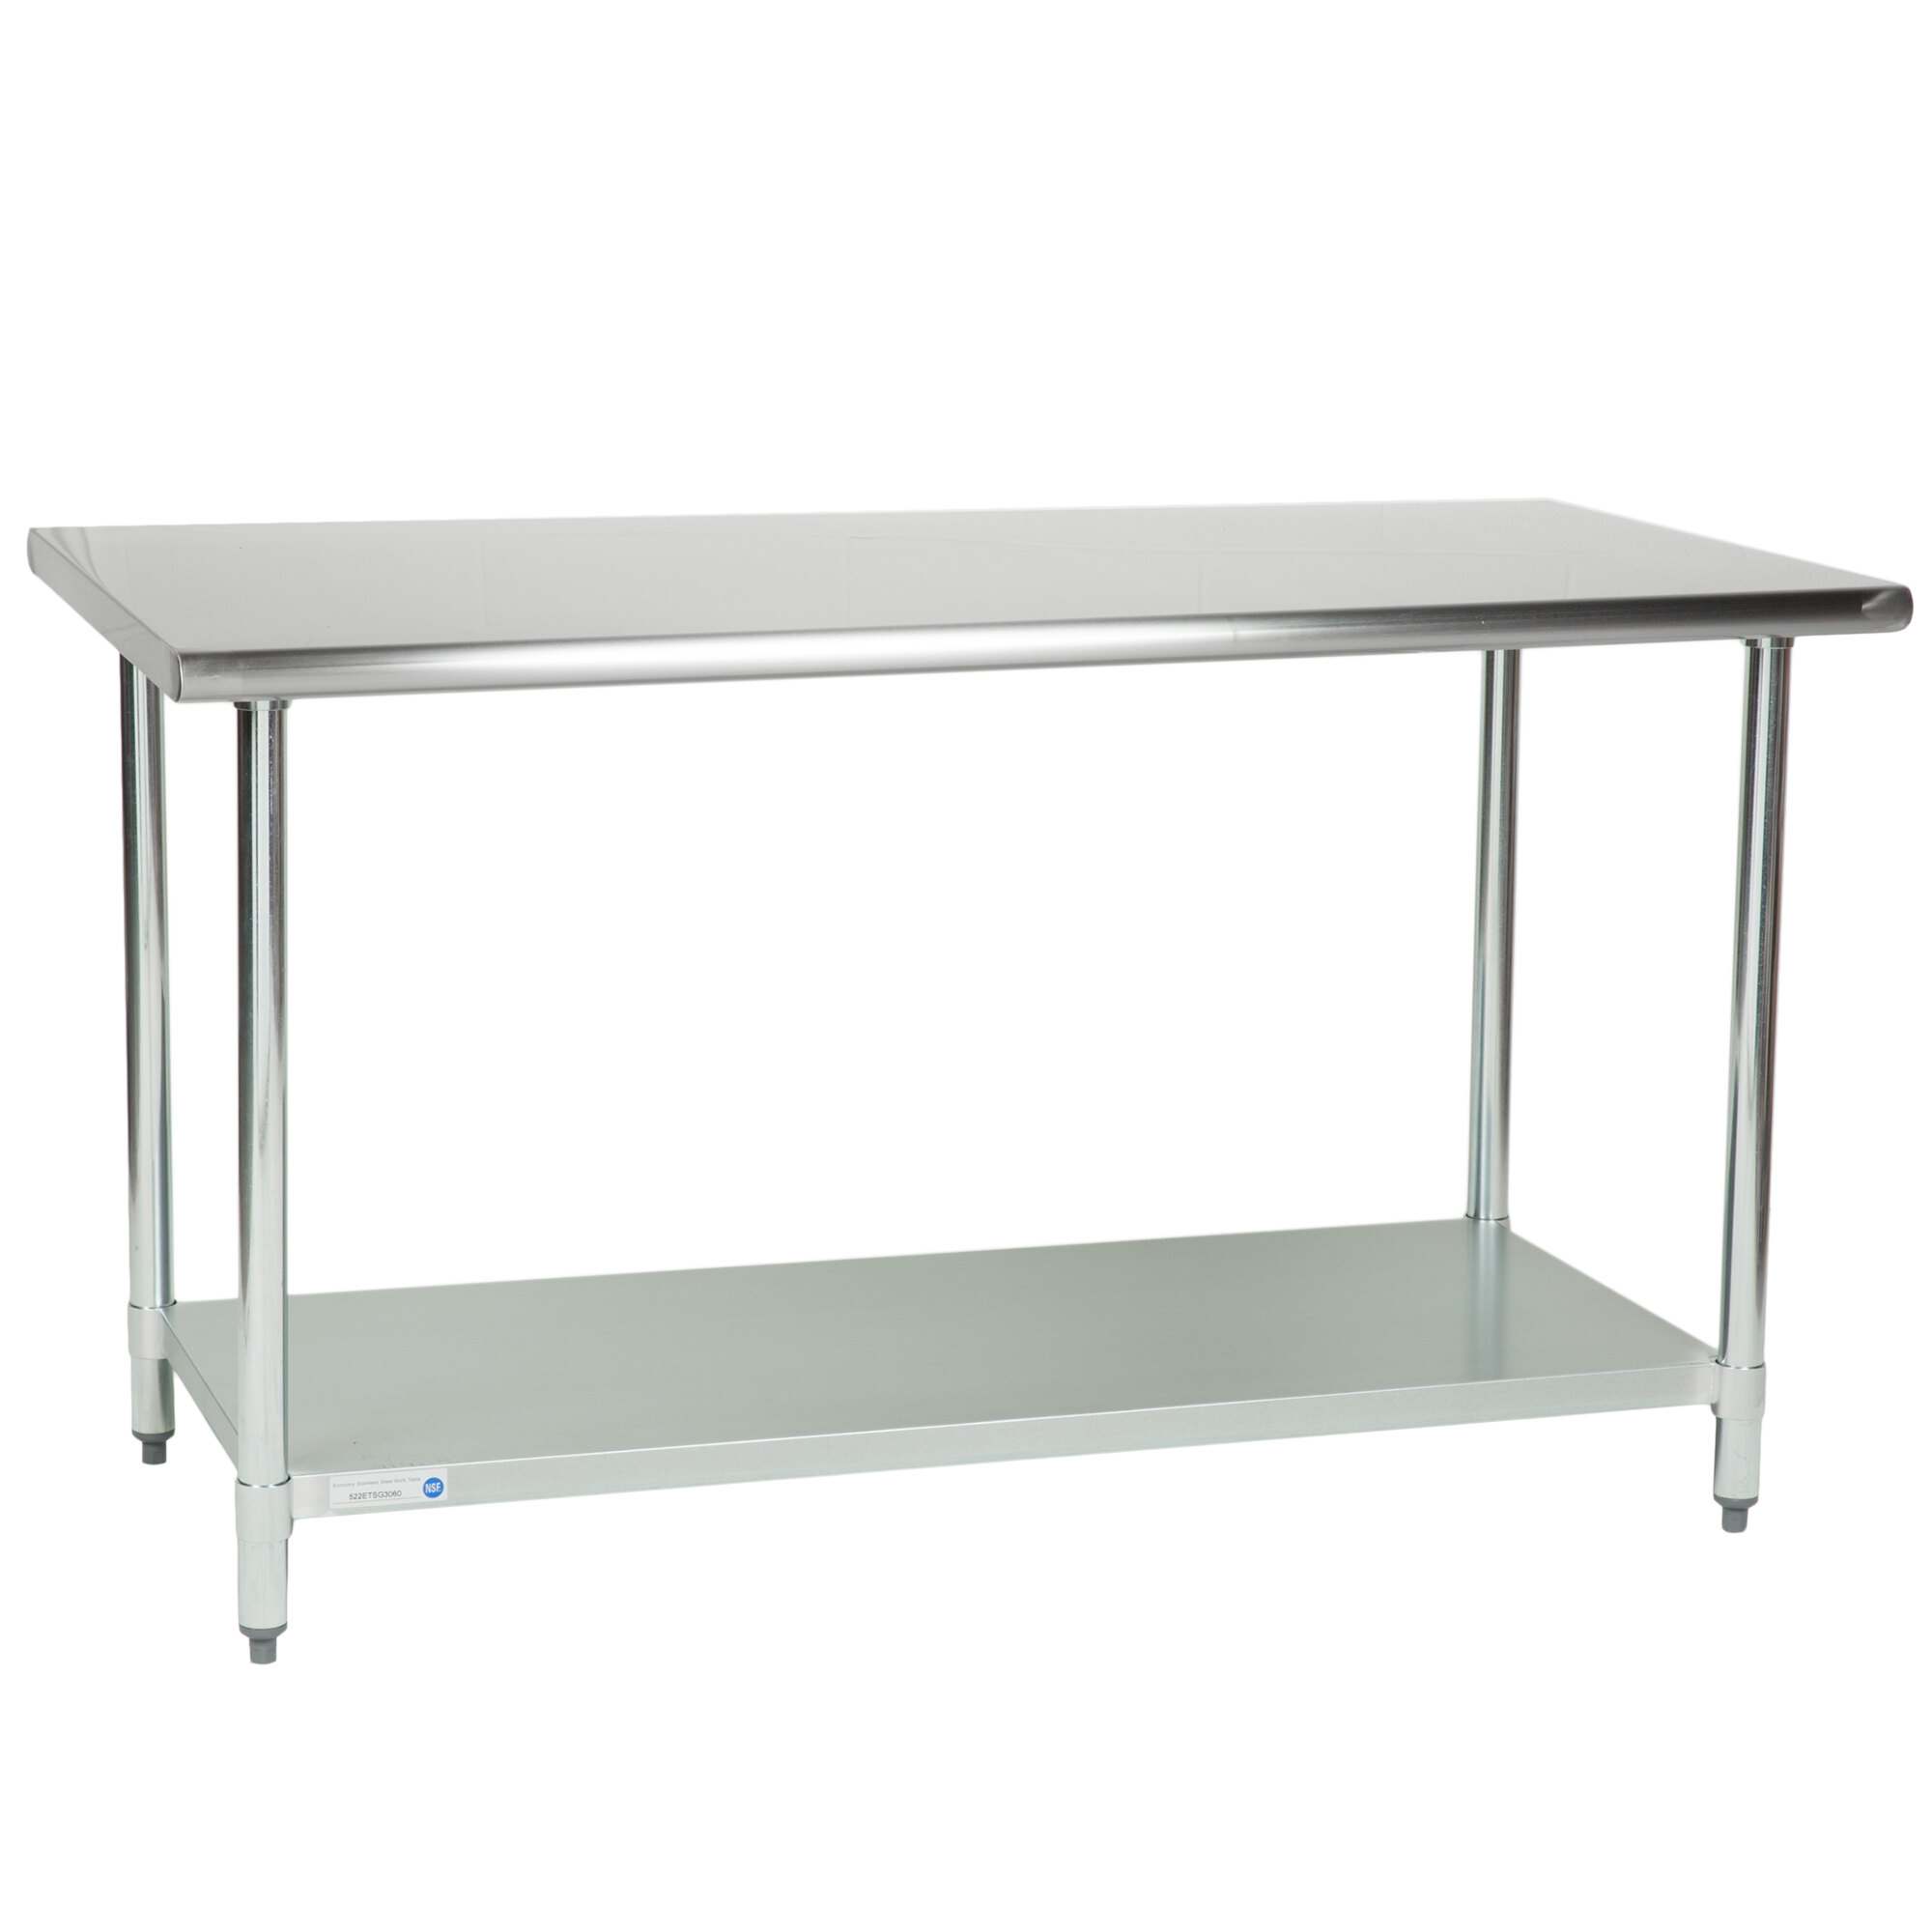 Steelton 30" x 60" 18 Gauge 430 Stainless Steel Work Table with Undershelf Stainless Steel Work Tables With Undershelf